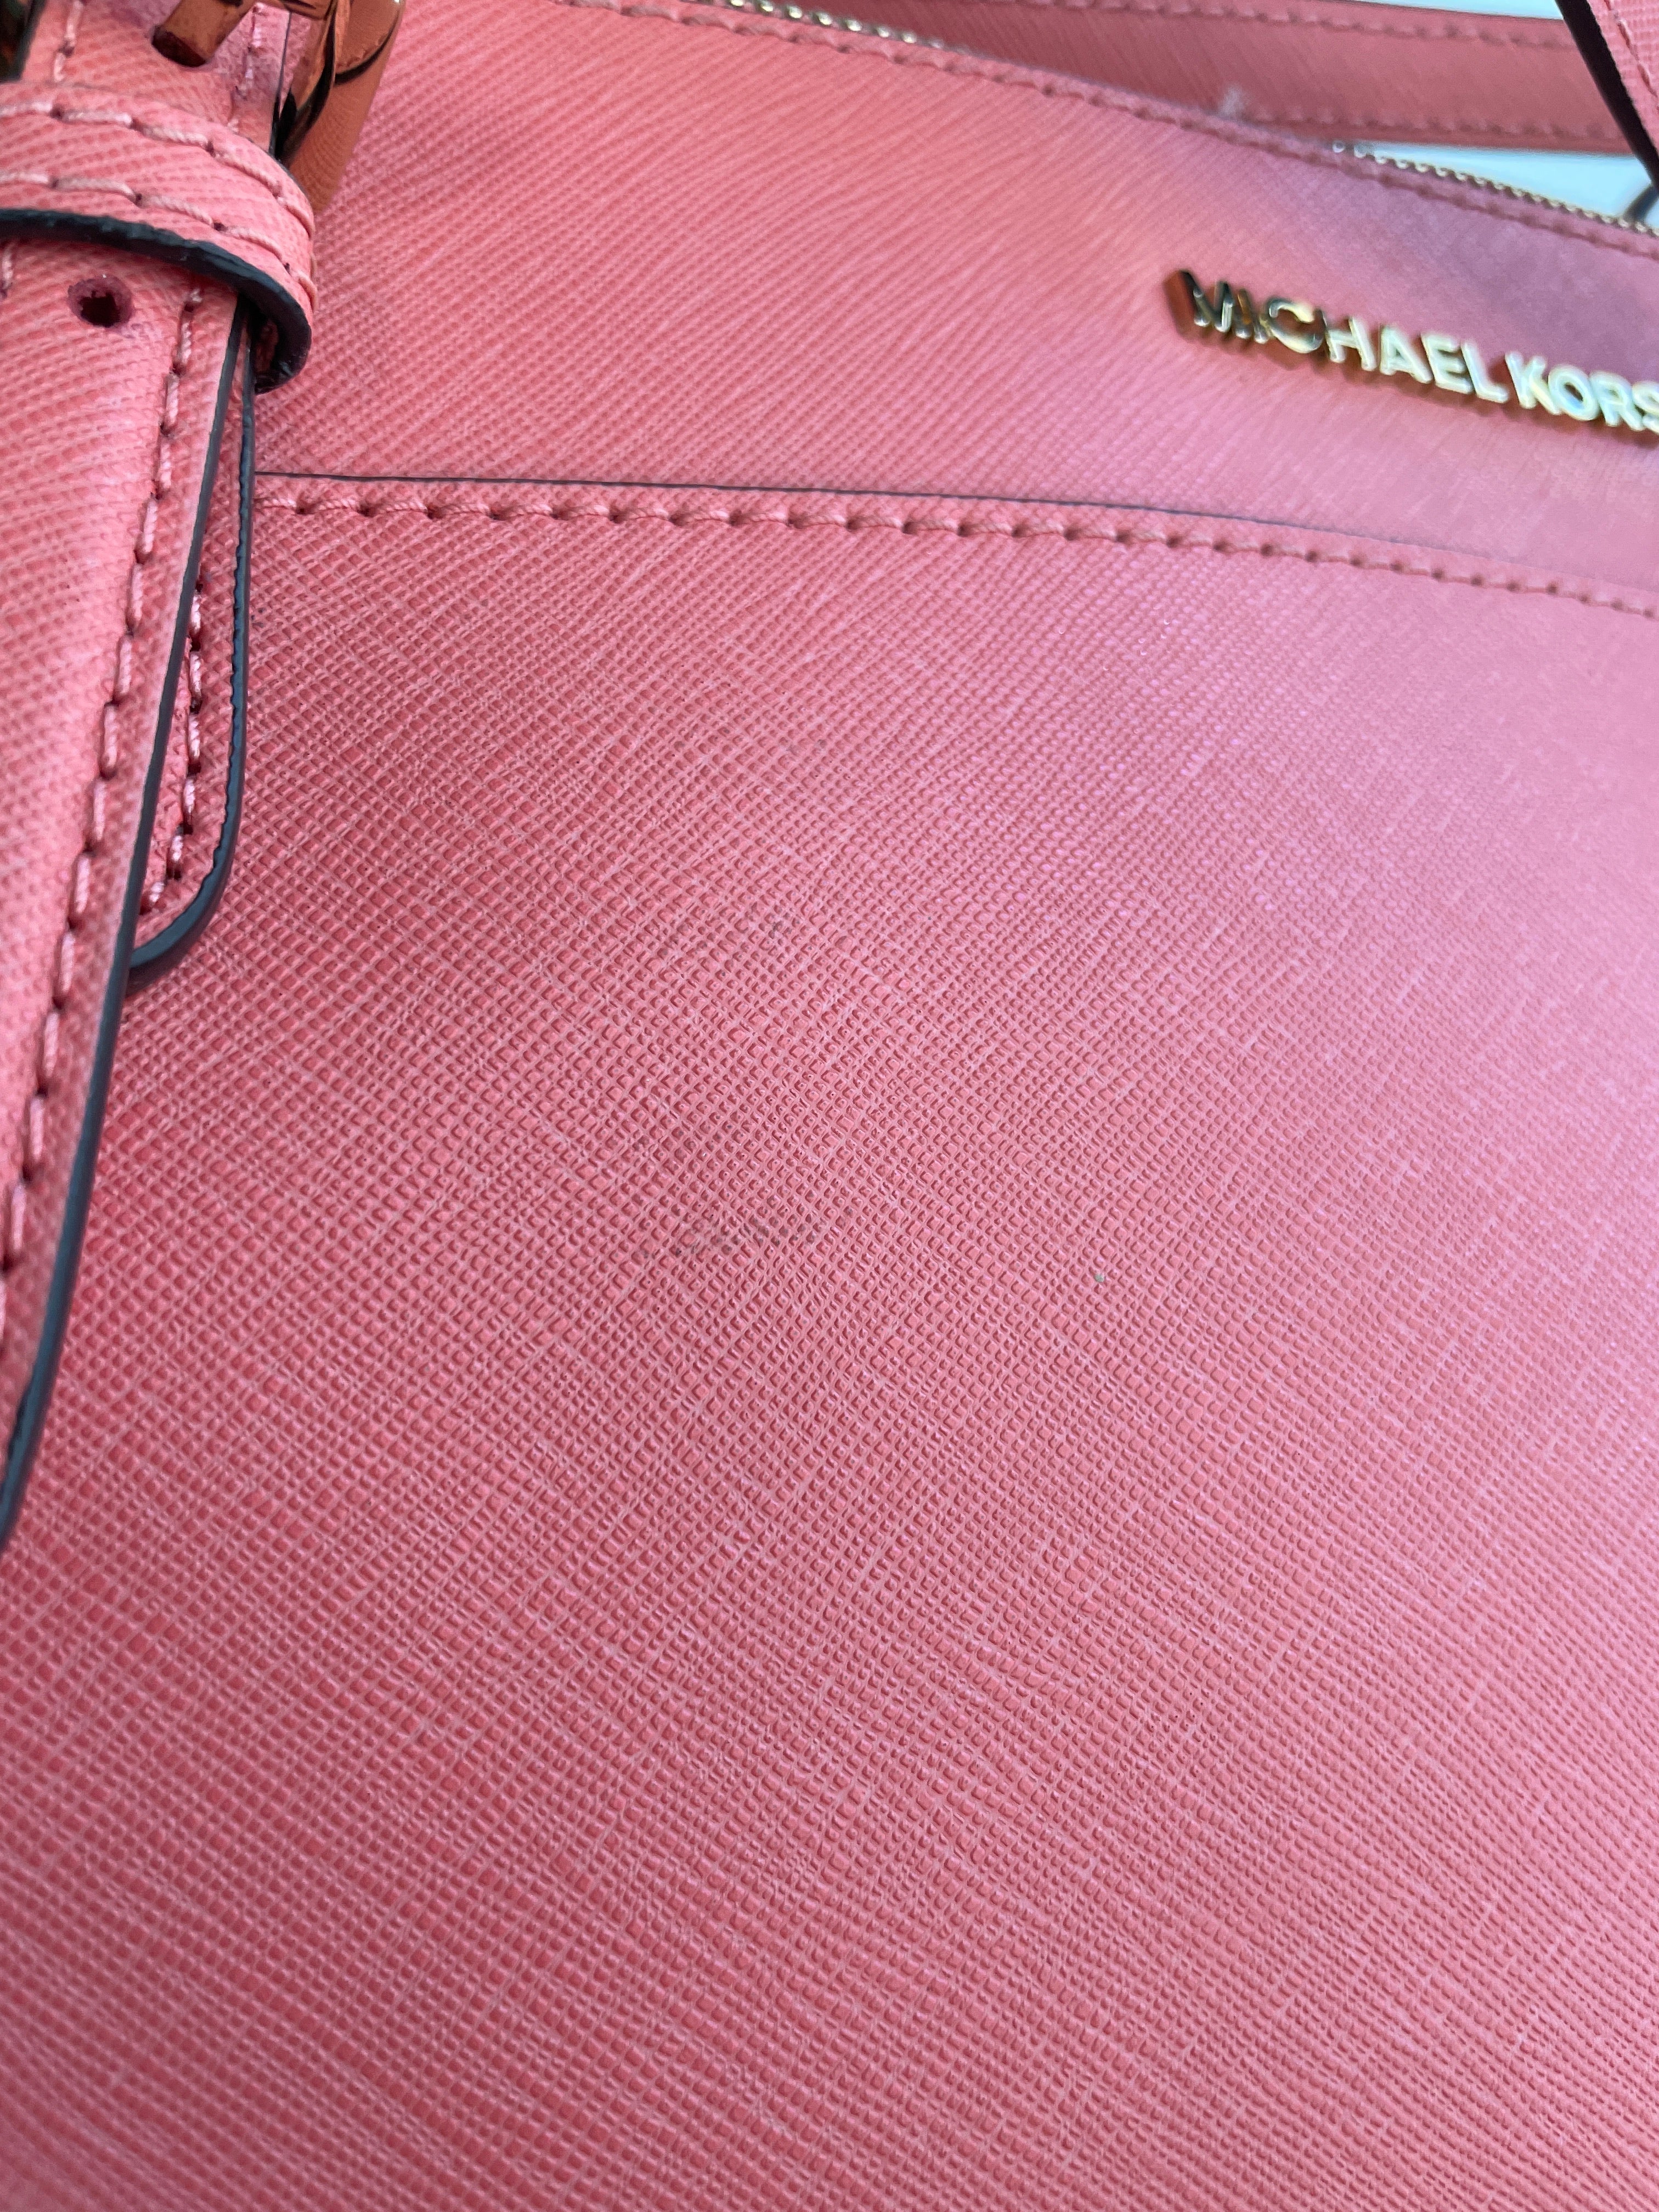 Michael Kors Medium Marilyn Leather Tote Bag In Pink